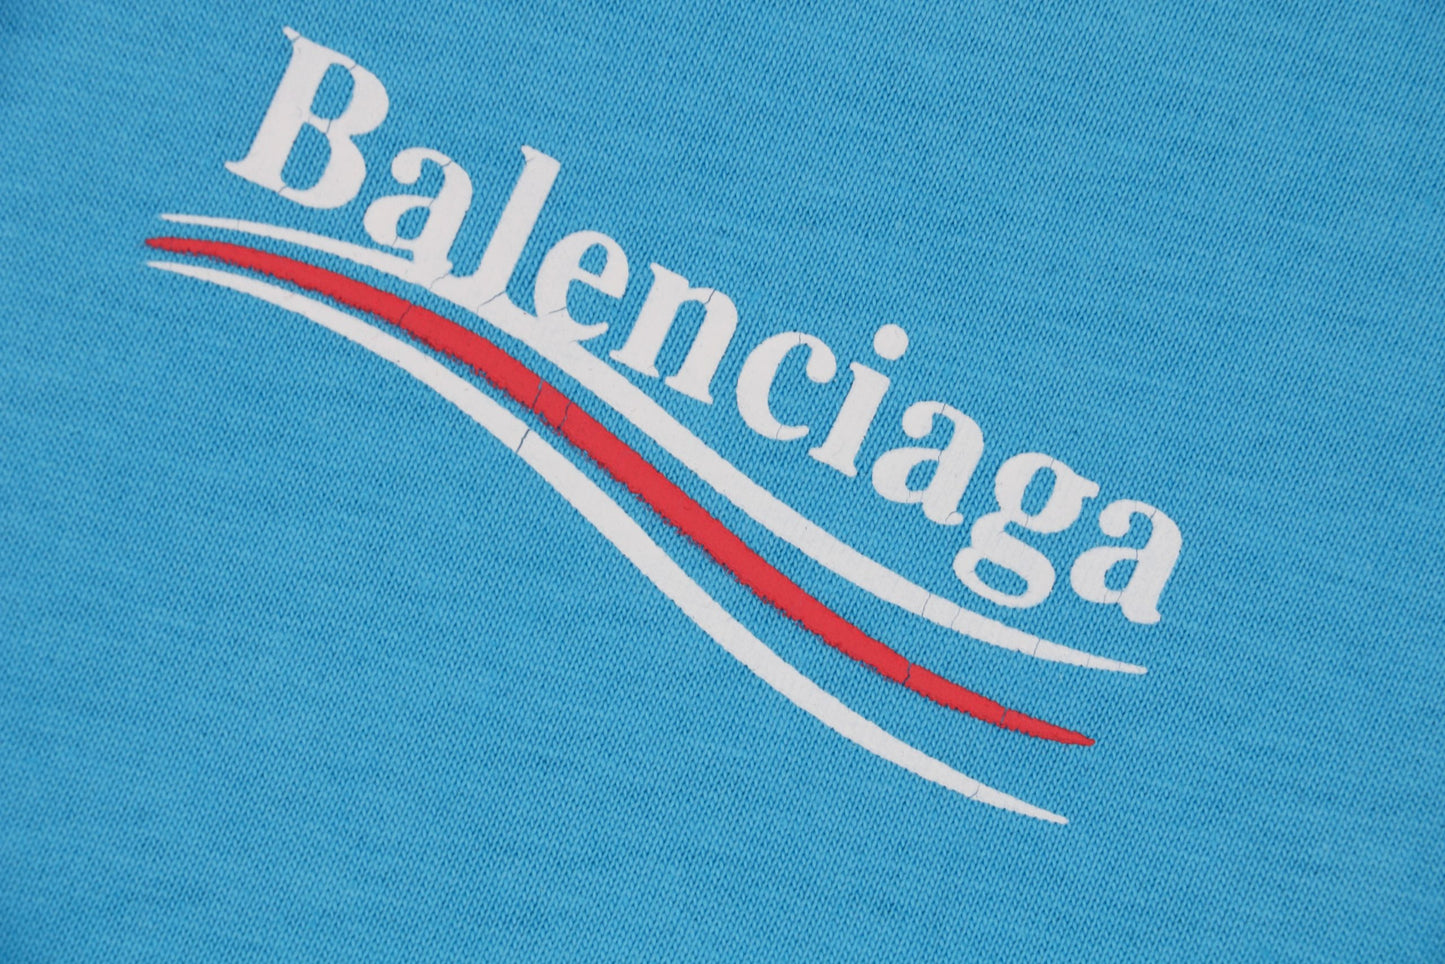 Balenci Political Campaign T-Shirt Light Blue